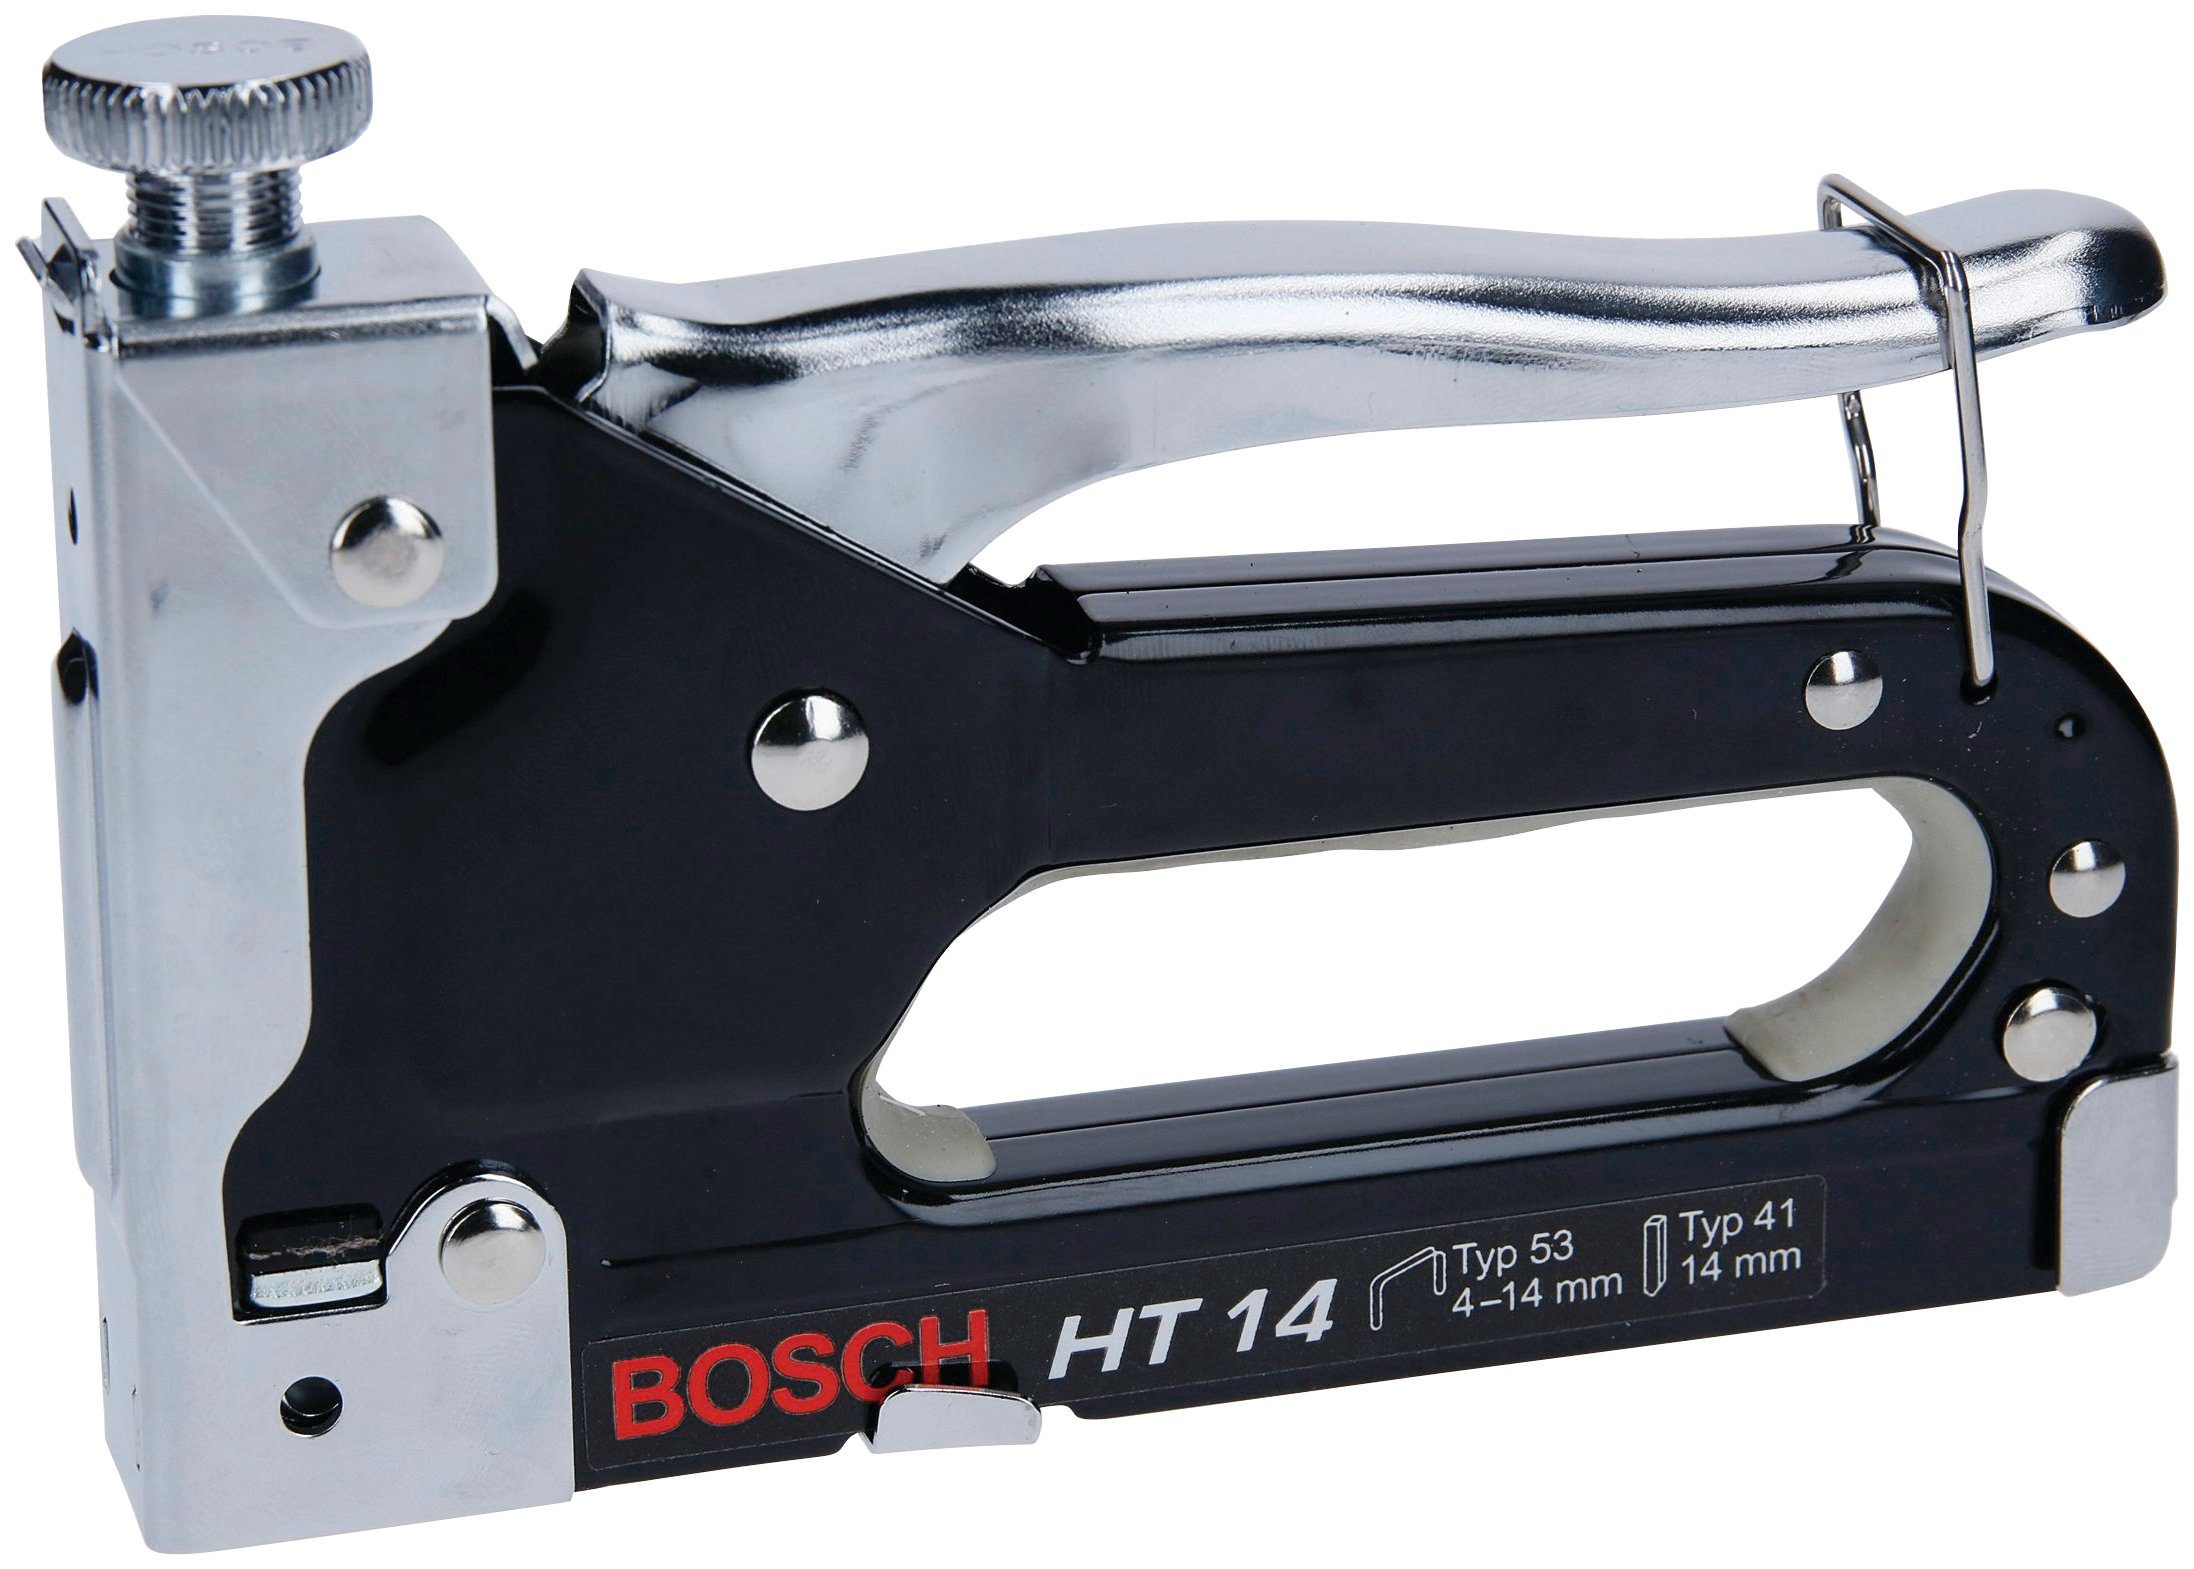 HT Handtacker 14 Professional Bosch